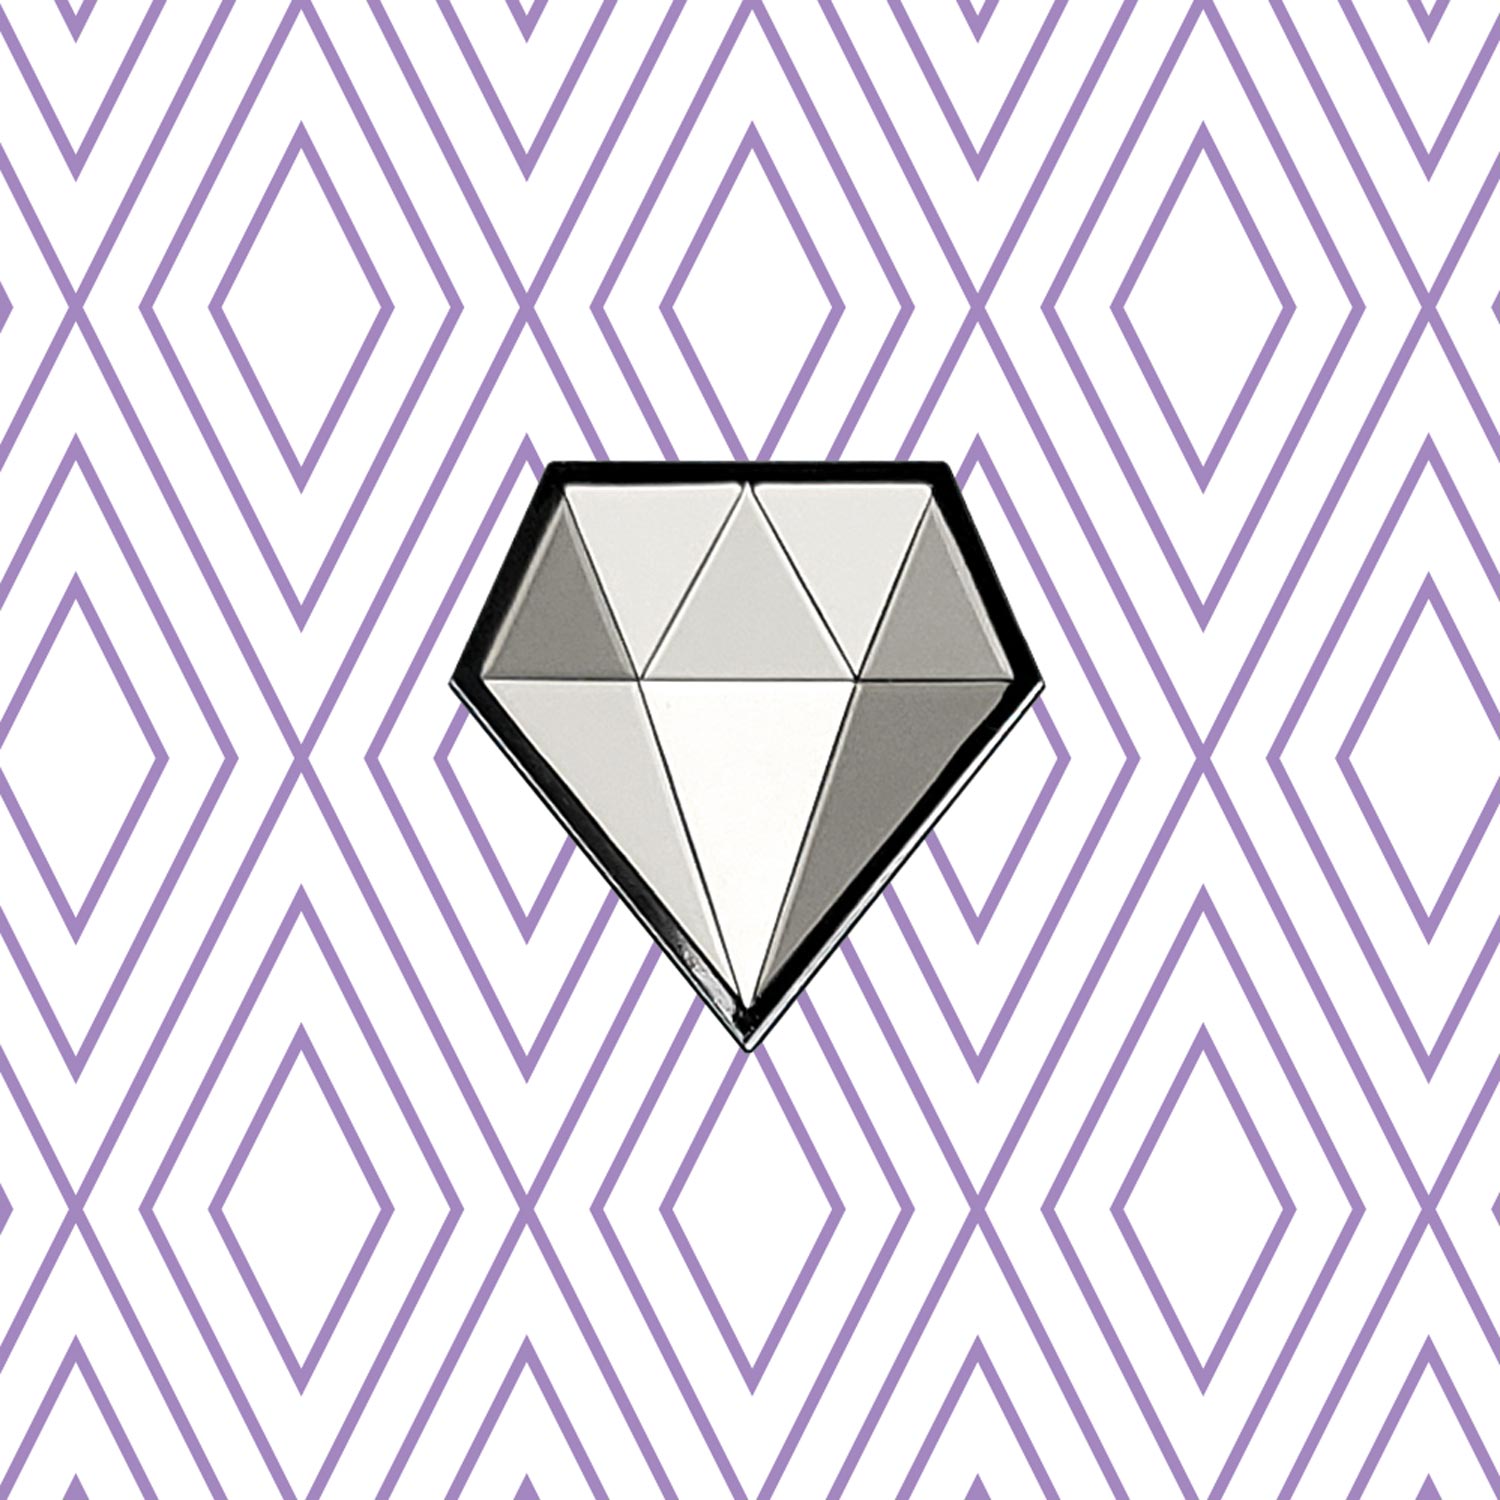 Steven Universe Diamonds Wallpapers